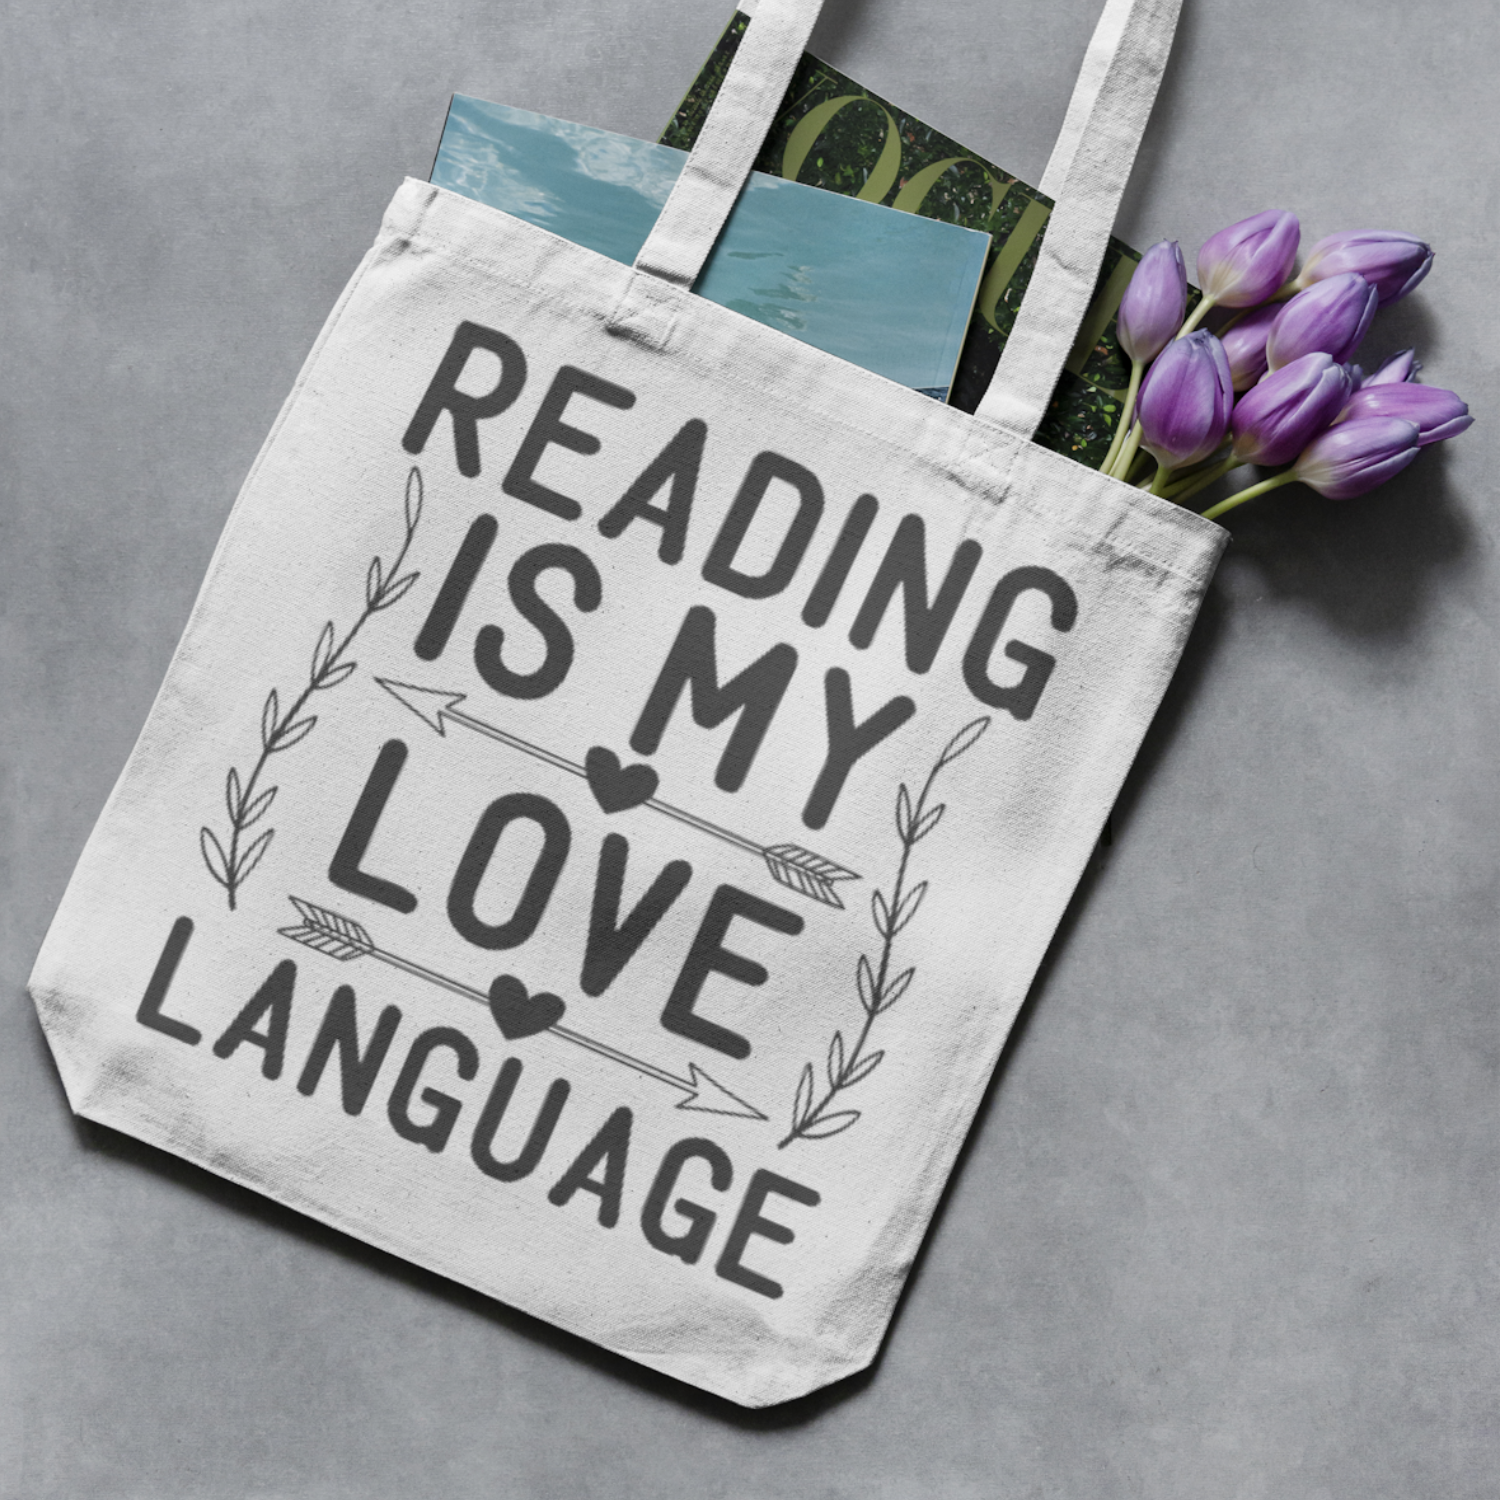 Reading is my Love Language SVG | Digital Download | Cut File | SVG